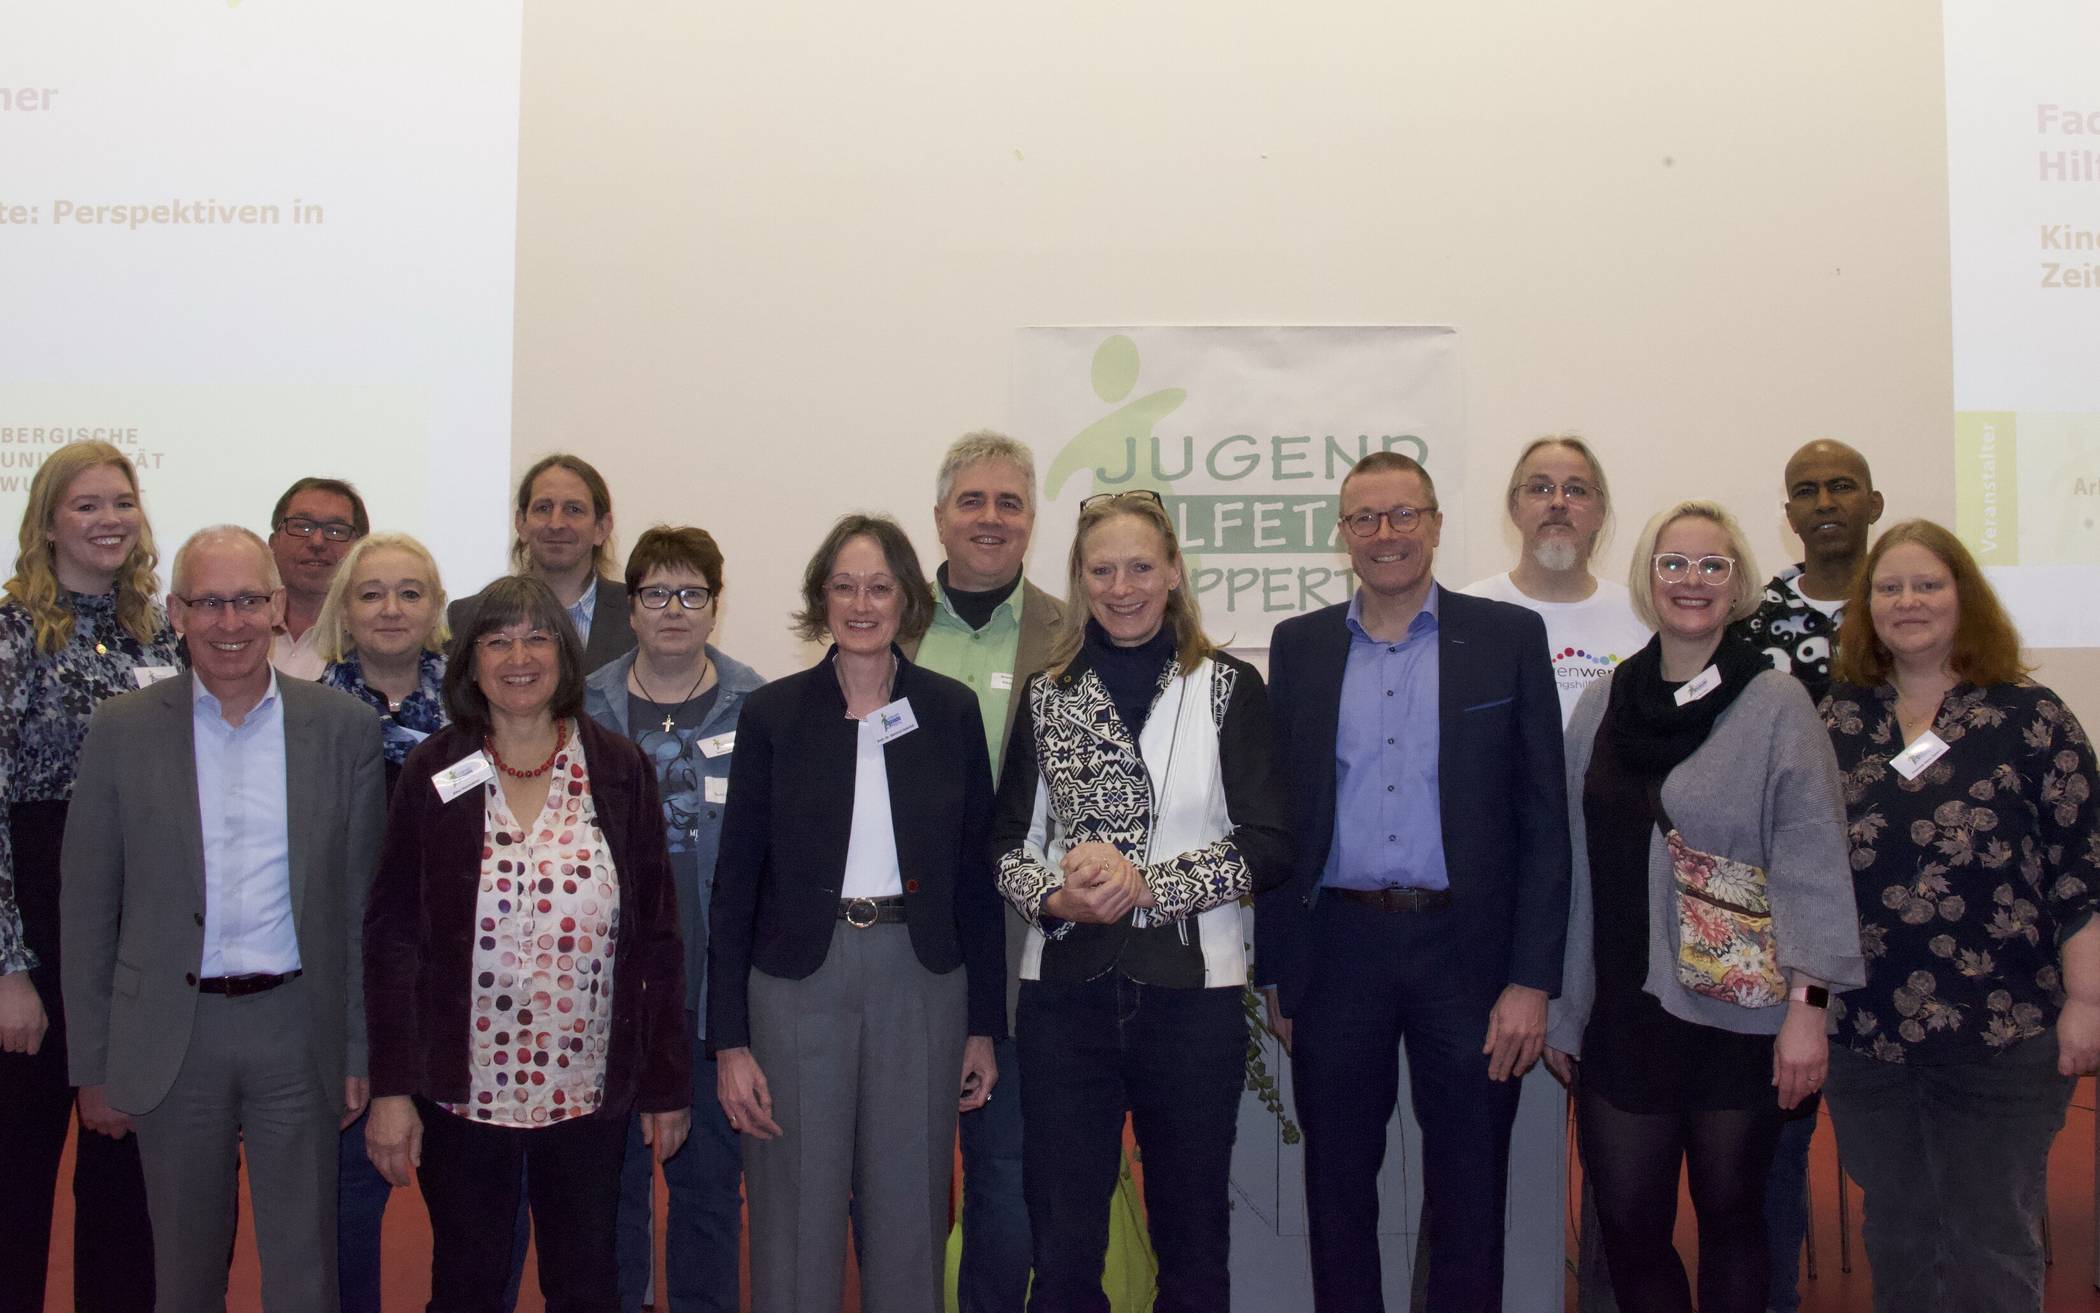  Zum sechsten Mal fand der Jugendhilfetag an der Bergischen Universität Wuppertal statt. 